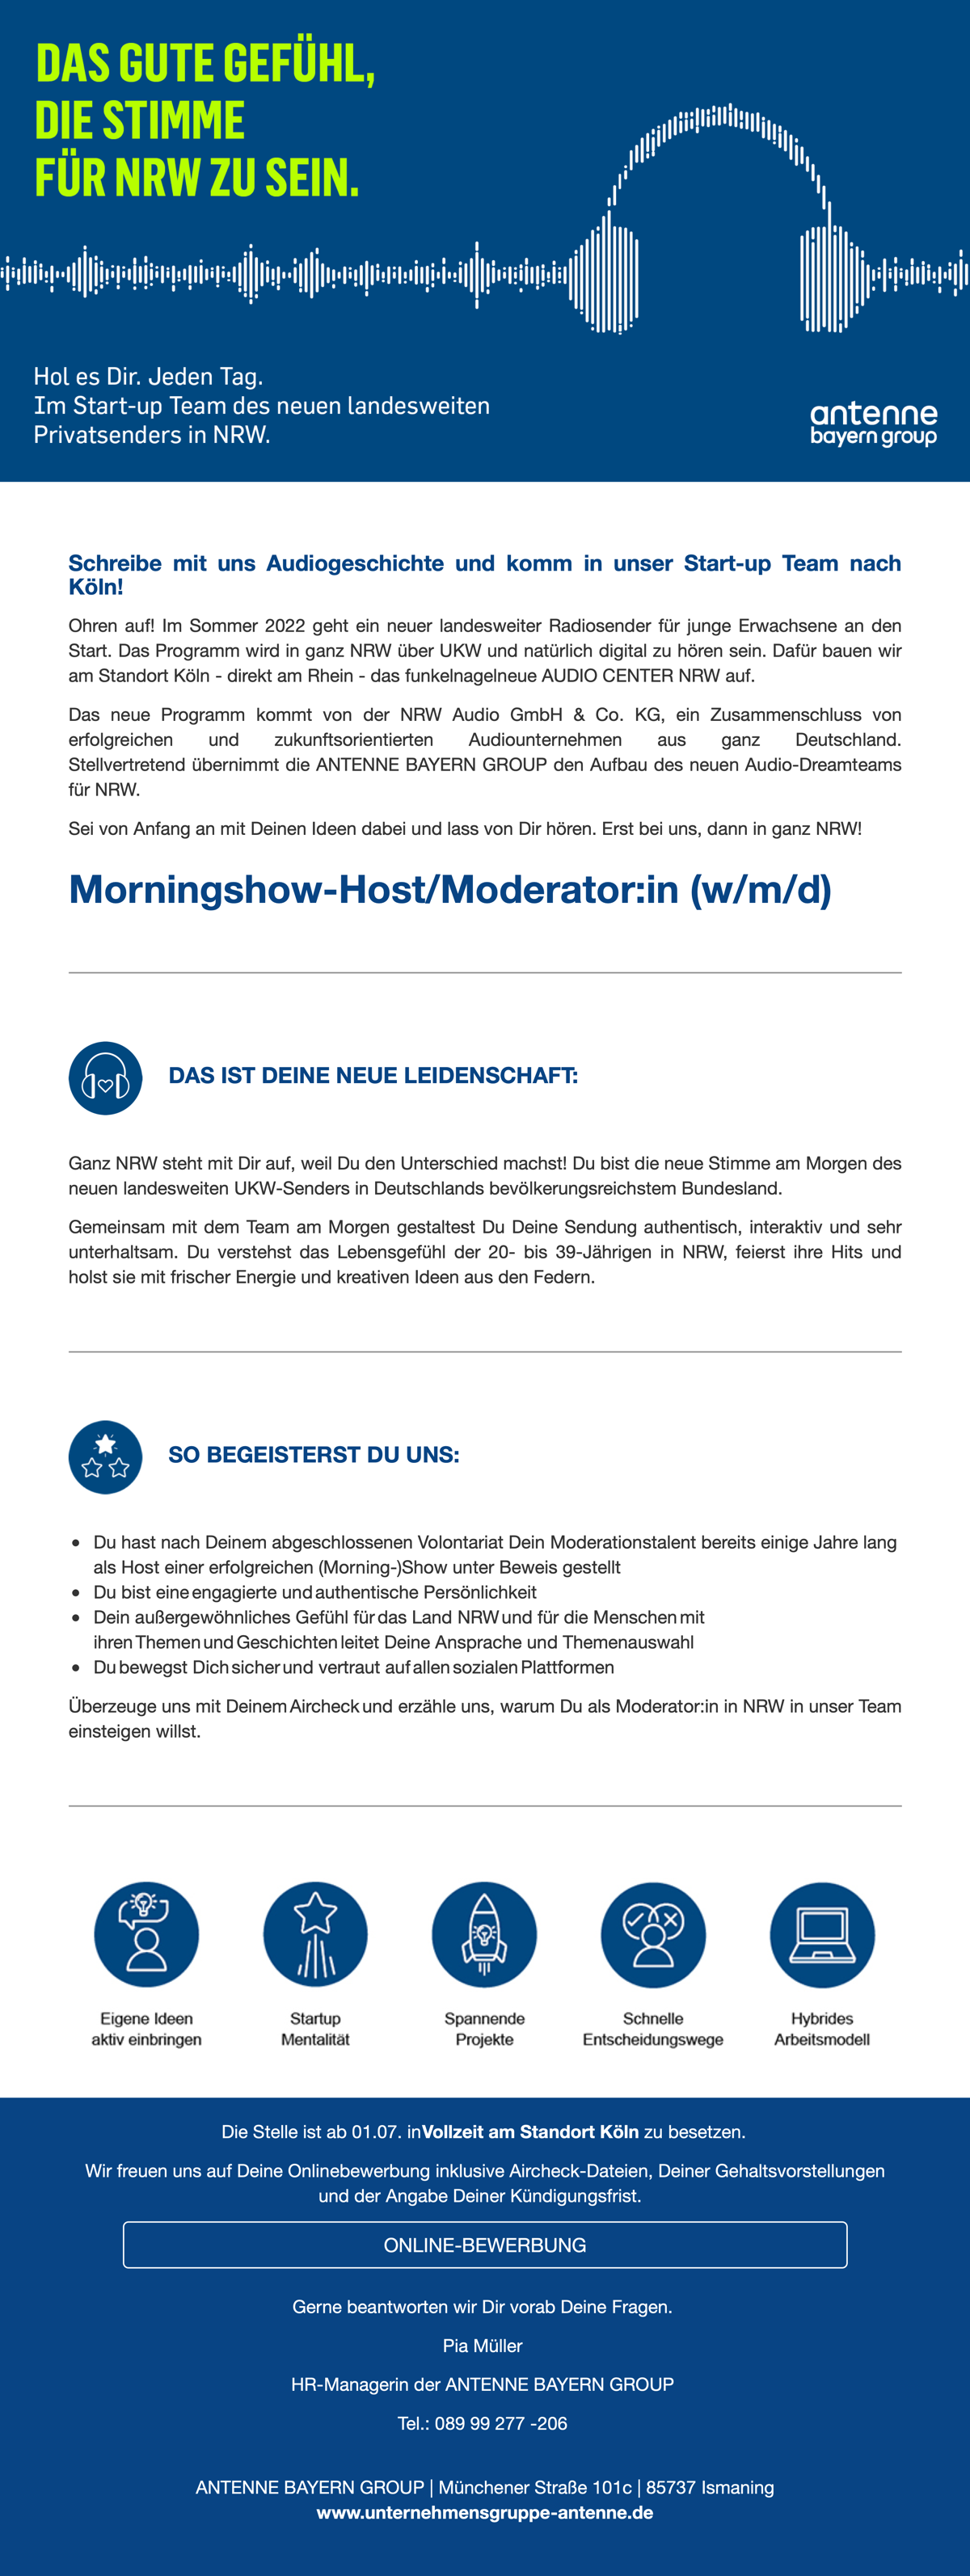 Morningshow-Host/Moderator:in (w/m/d) für NRW